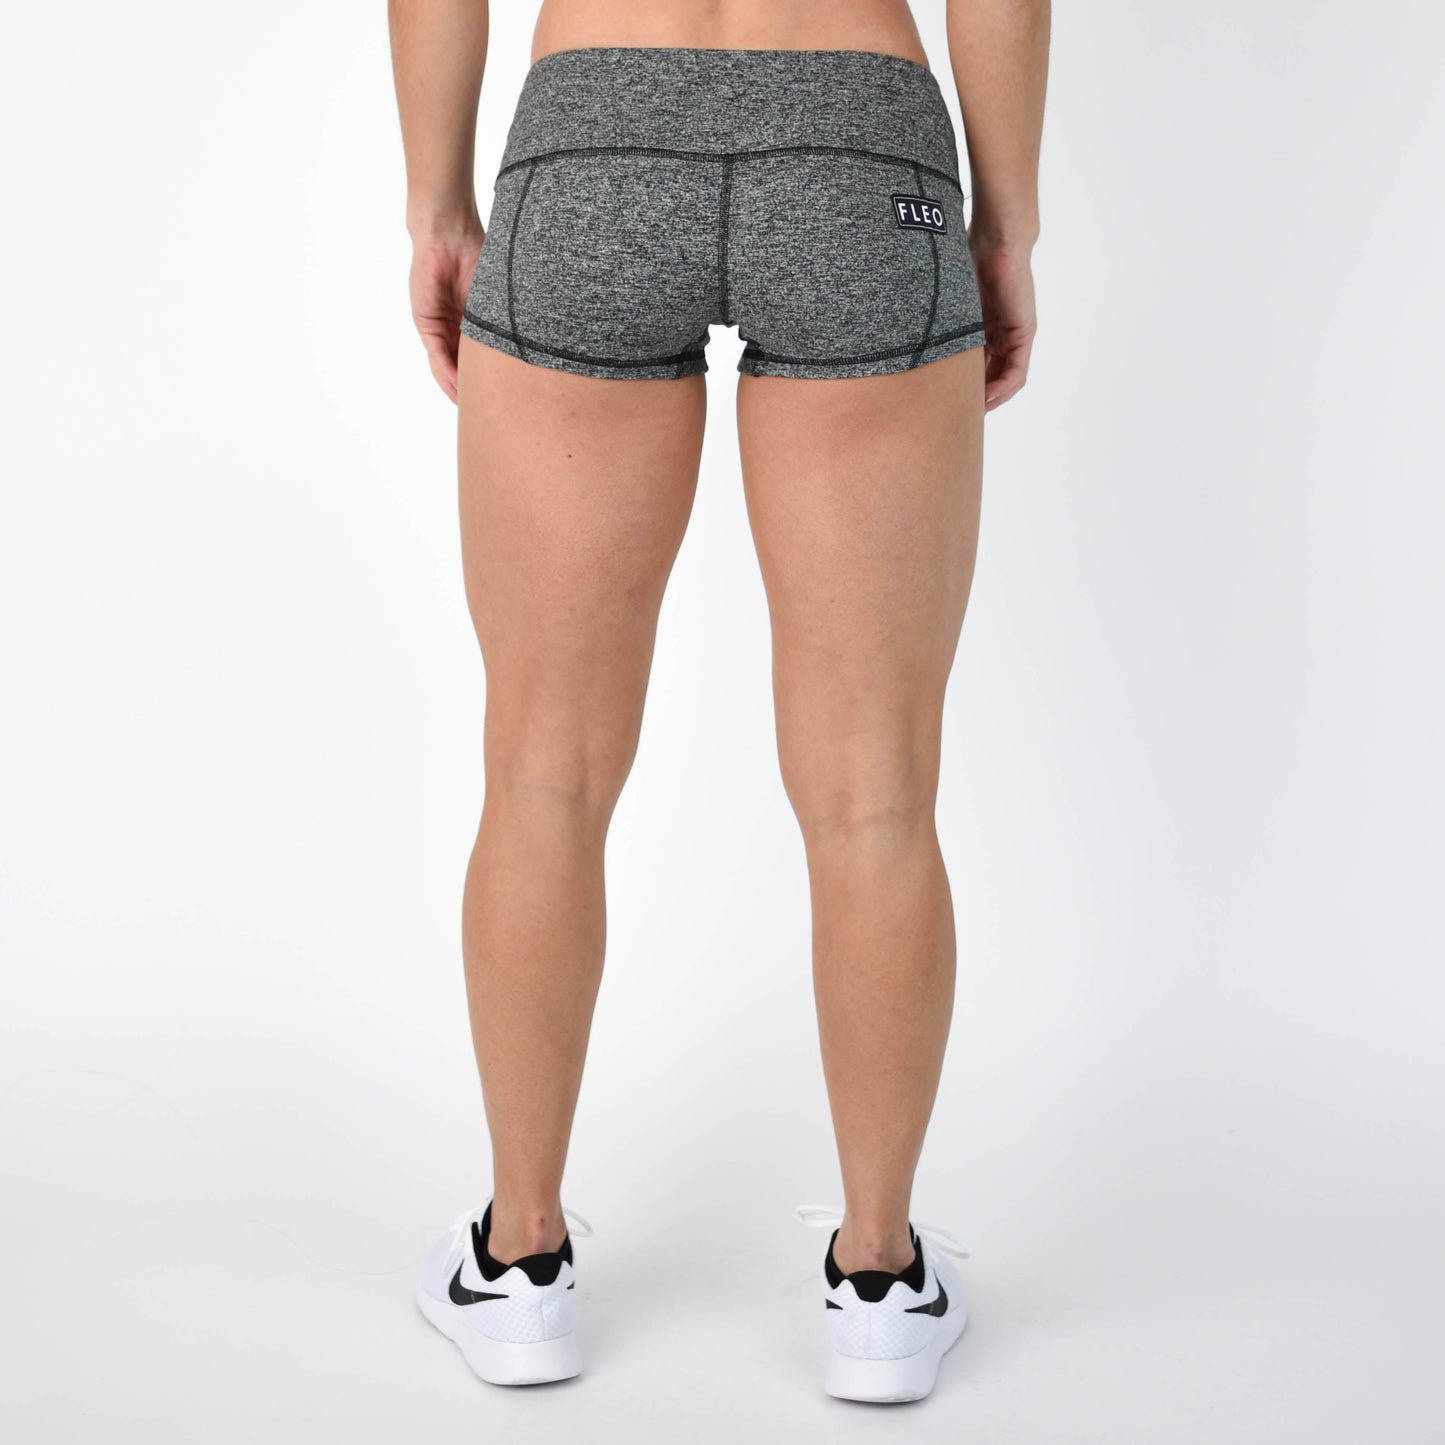 FLEO Heather Grey Shorts (Low-rise Contour)